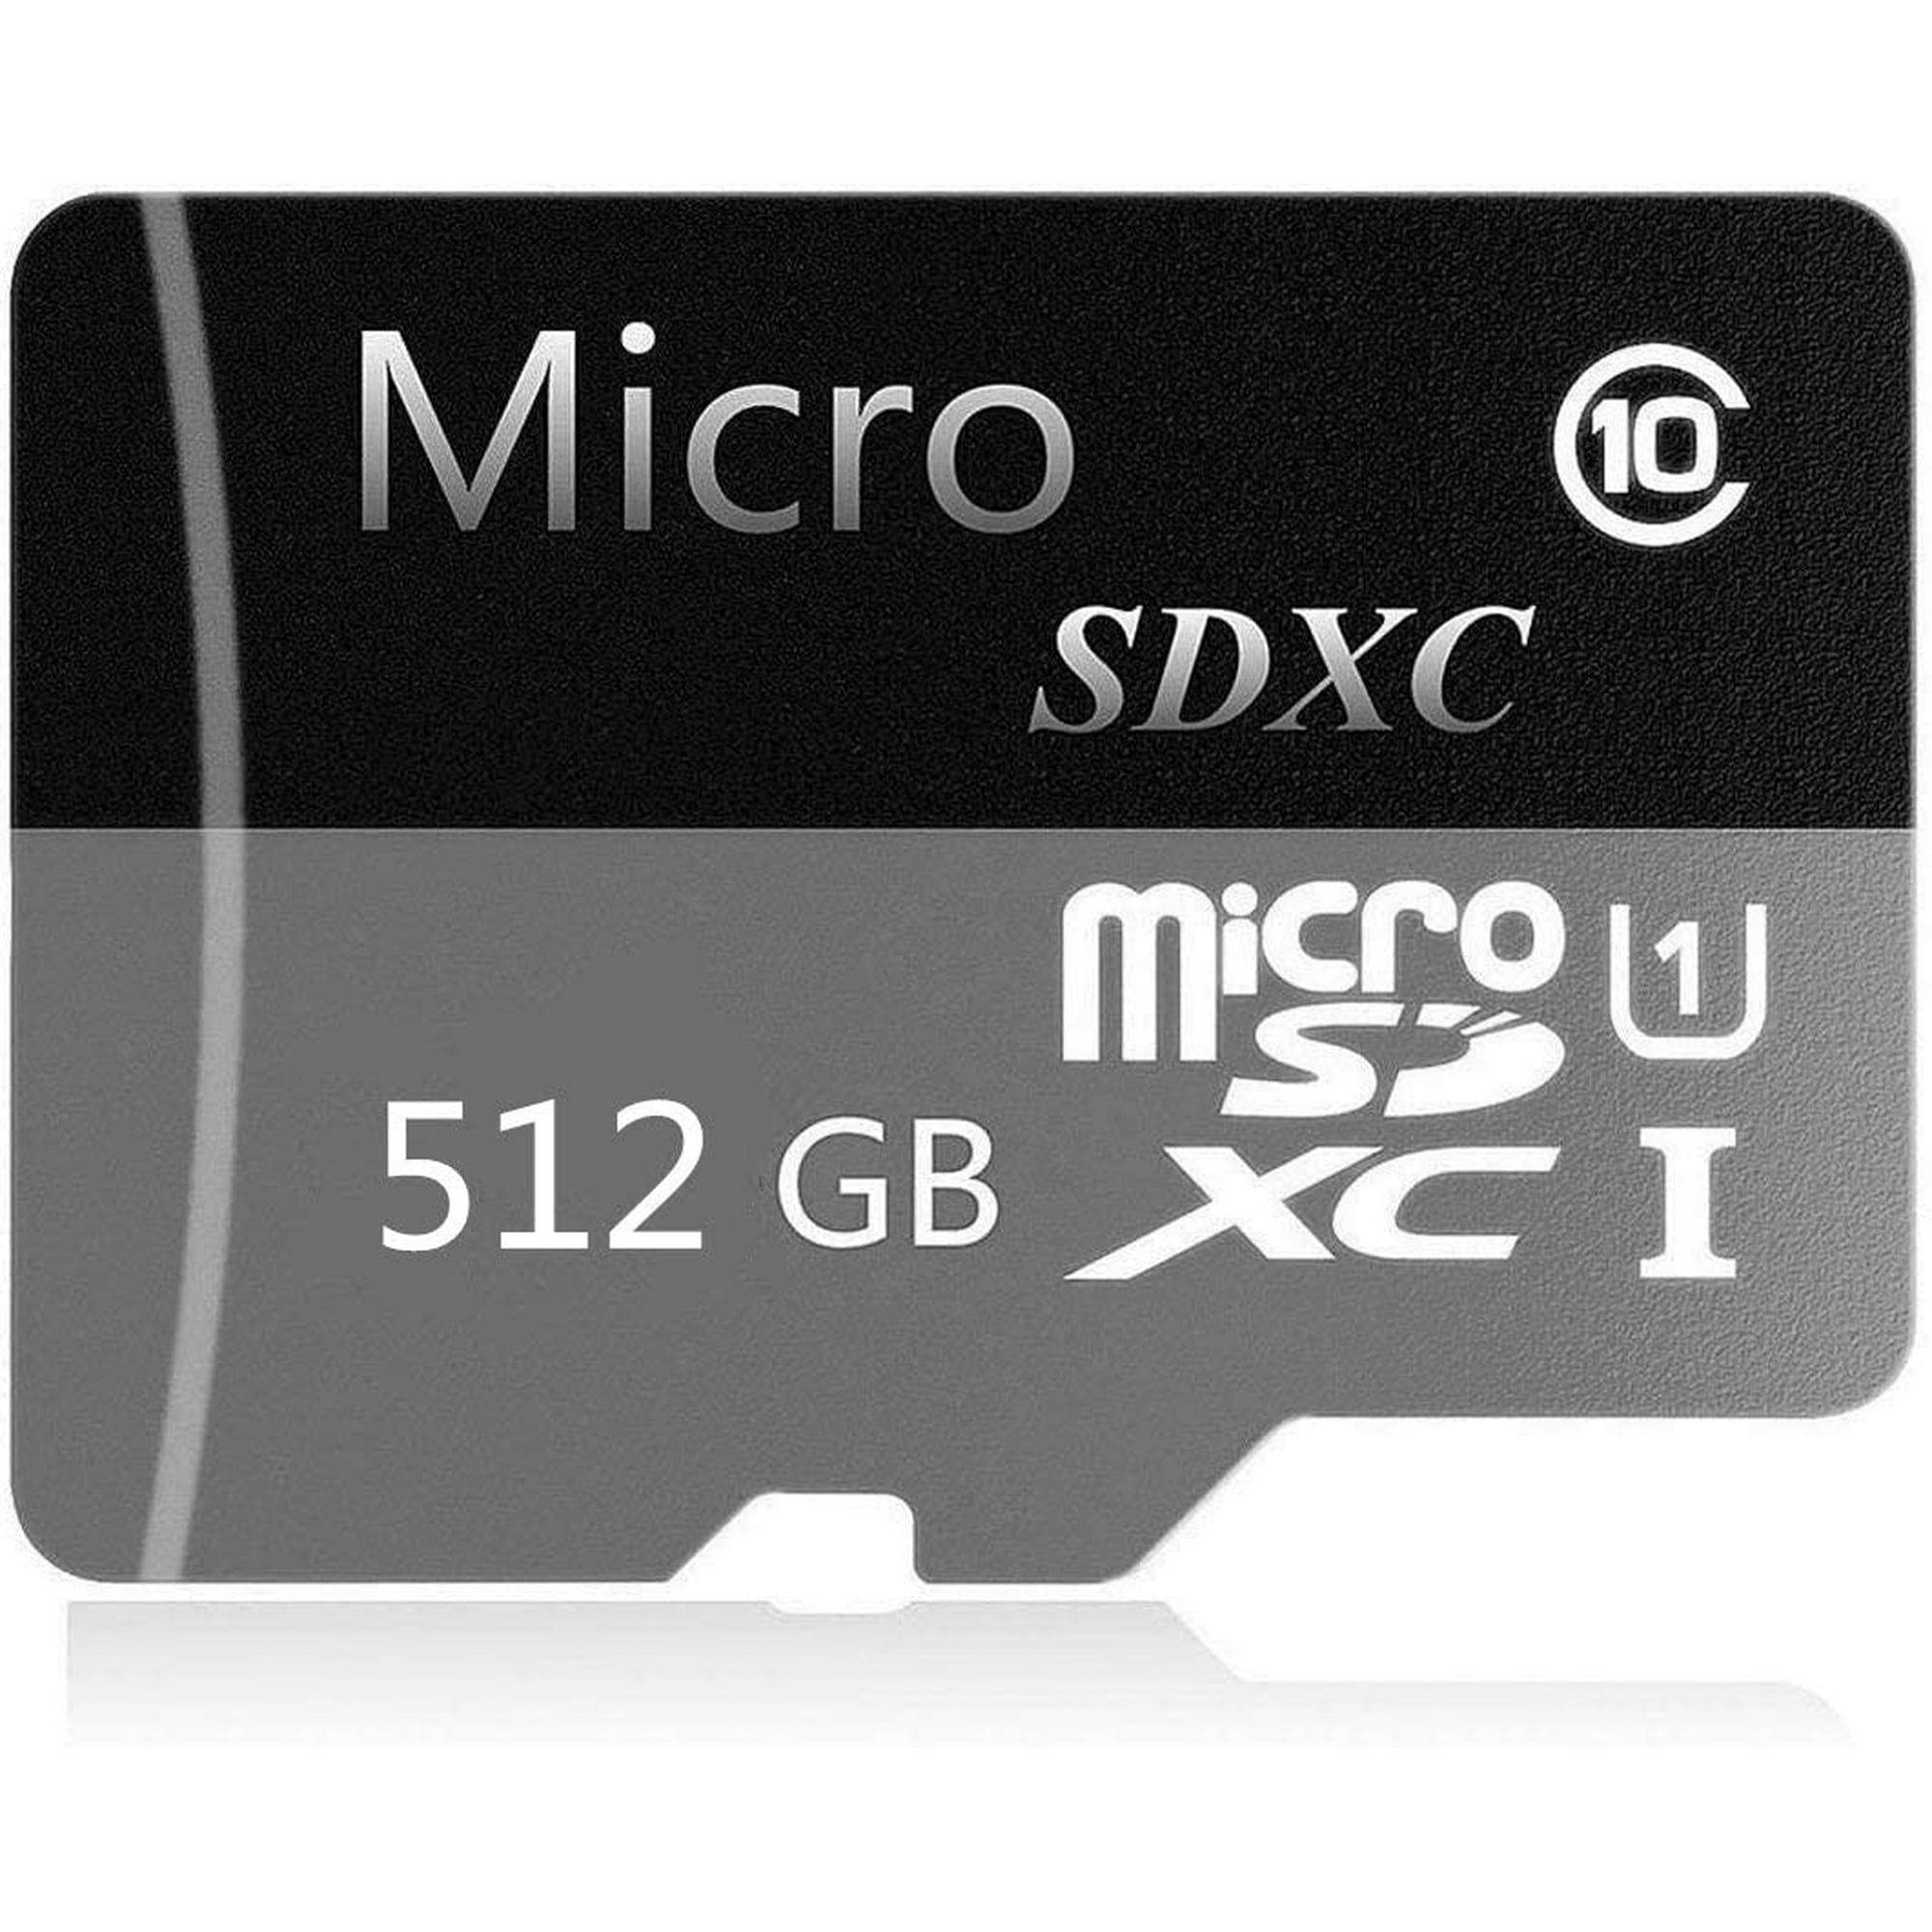 Память микро sd 256 гб. 1024 GB SD Card. SD Card 256 GB. SD Card 512 GB. MICROSD 256 GB.